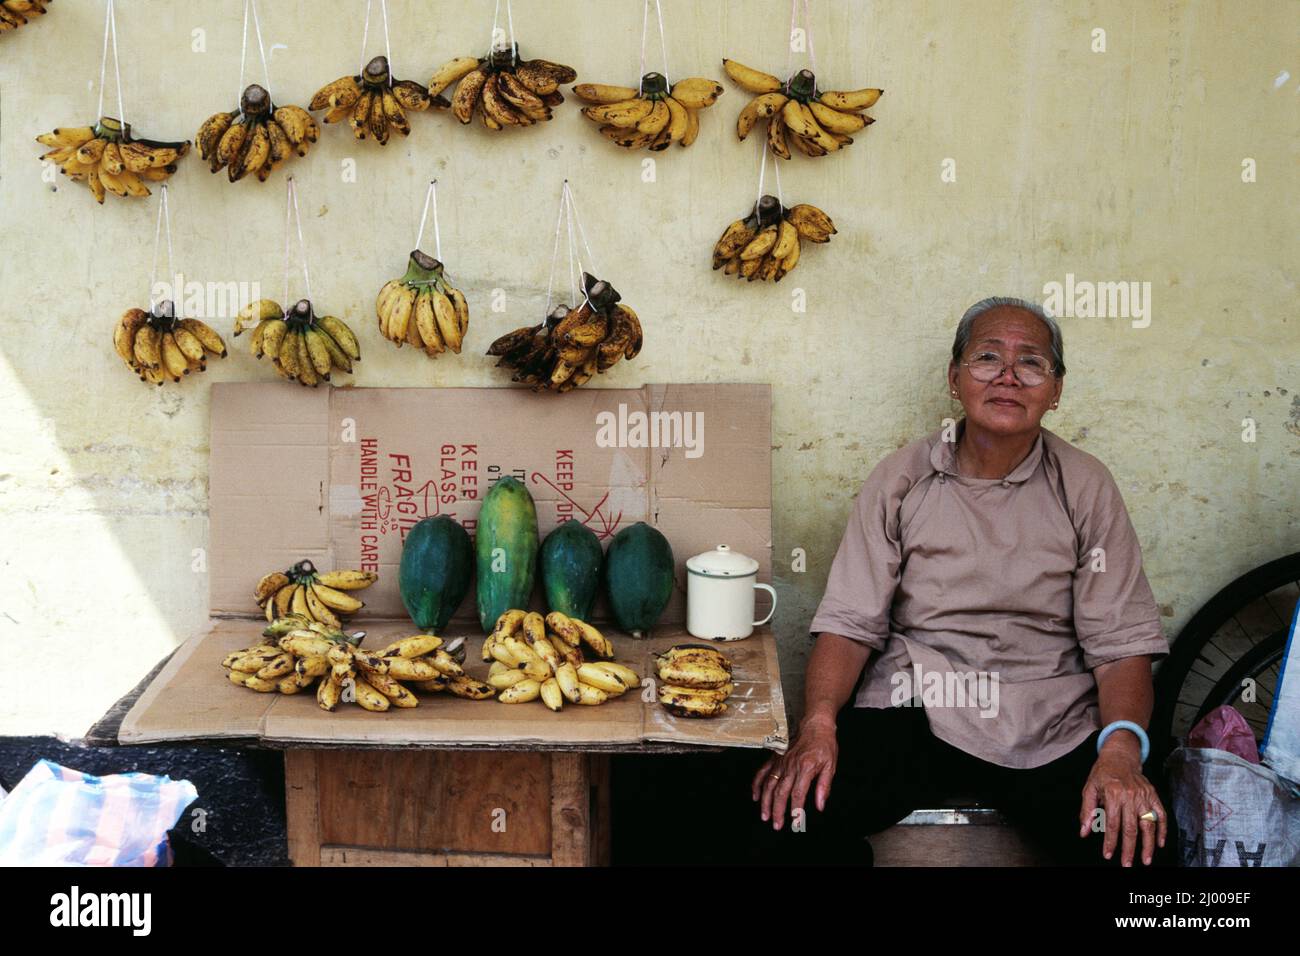 Singapore. Outdoor market. Woman selling bananas. Stock Photo